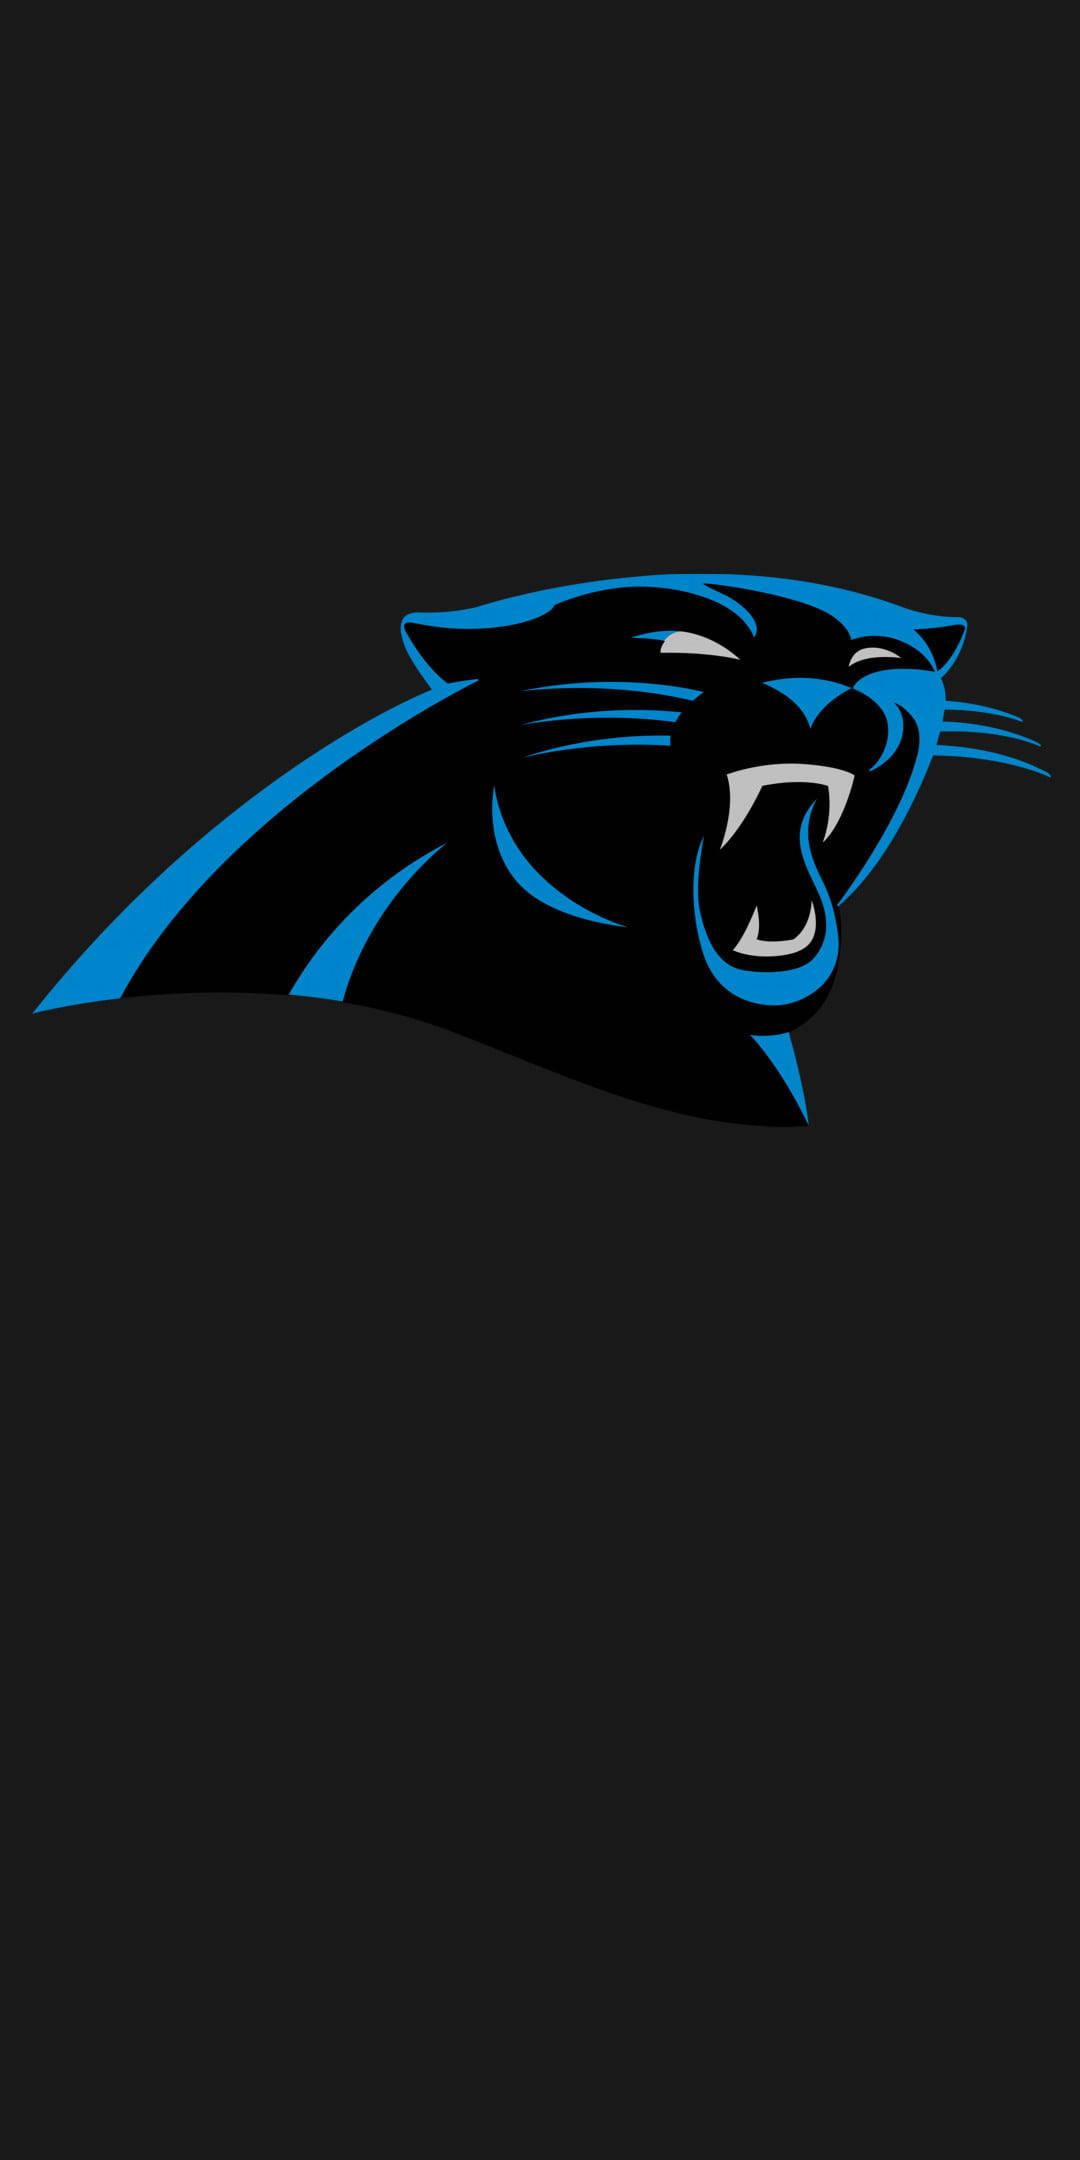 Carolina Panthers Logo For Mobile Screens Wallpaper